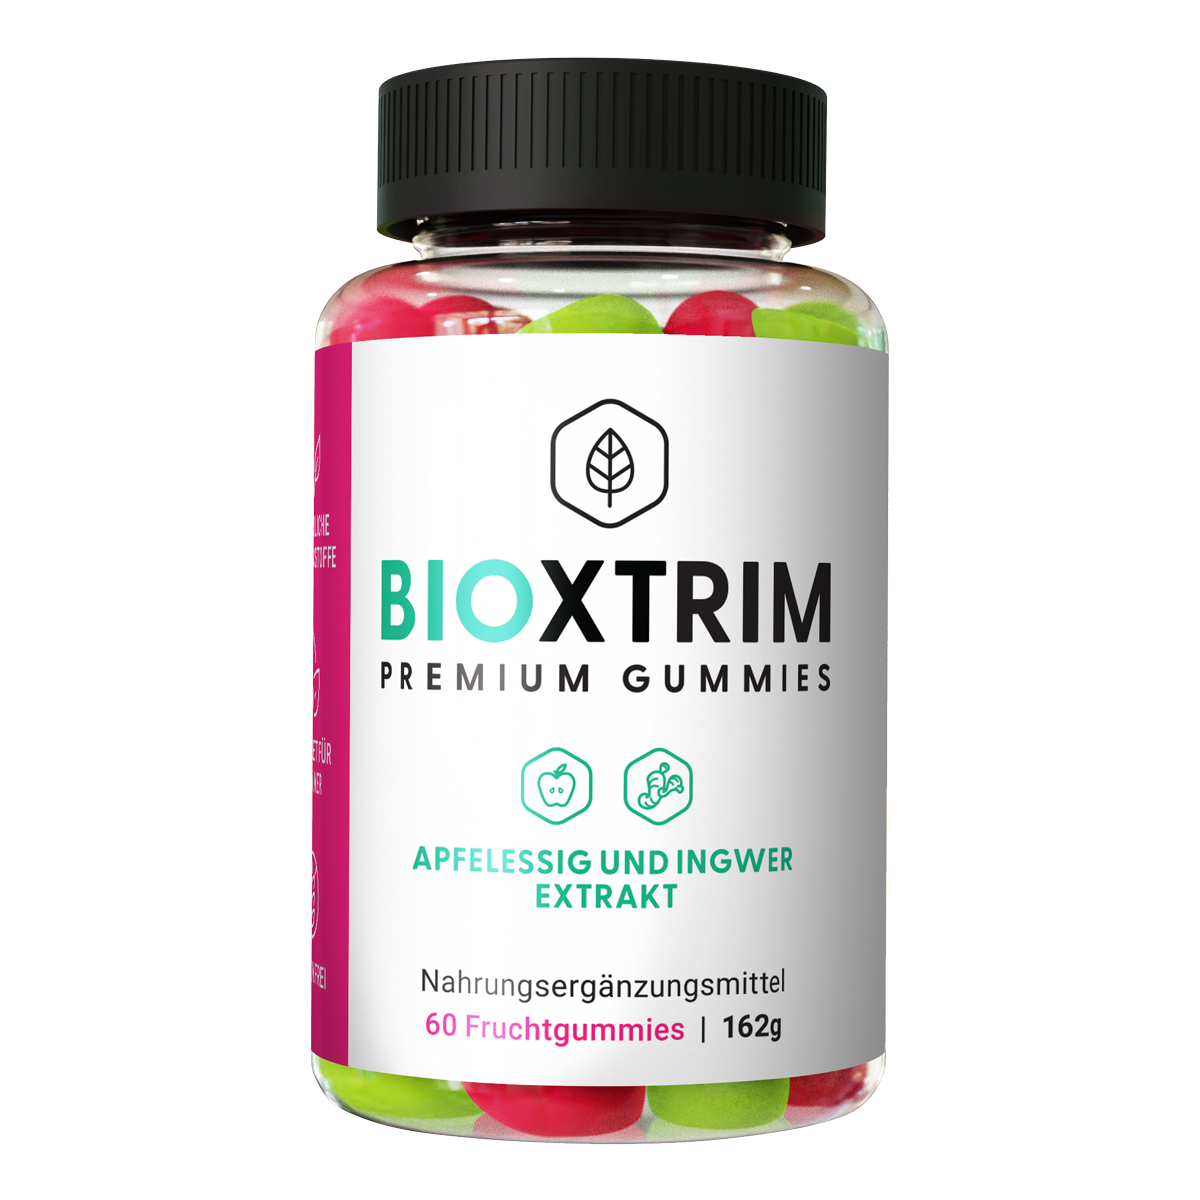 BioXtrim Premium Gummies - en pharmacie - sur Amazon - site du fabricant - prix - où acheter